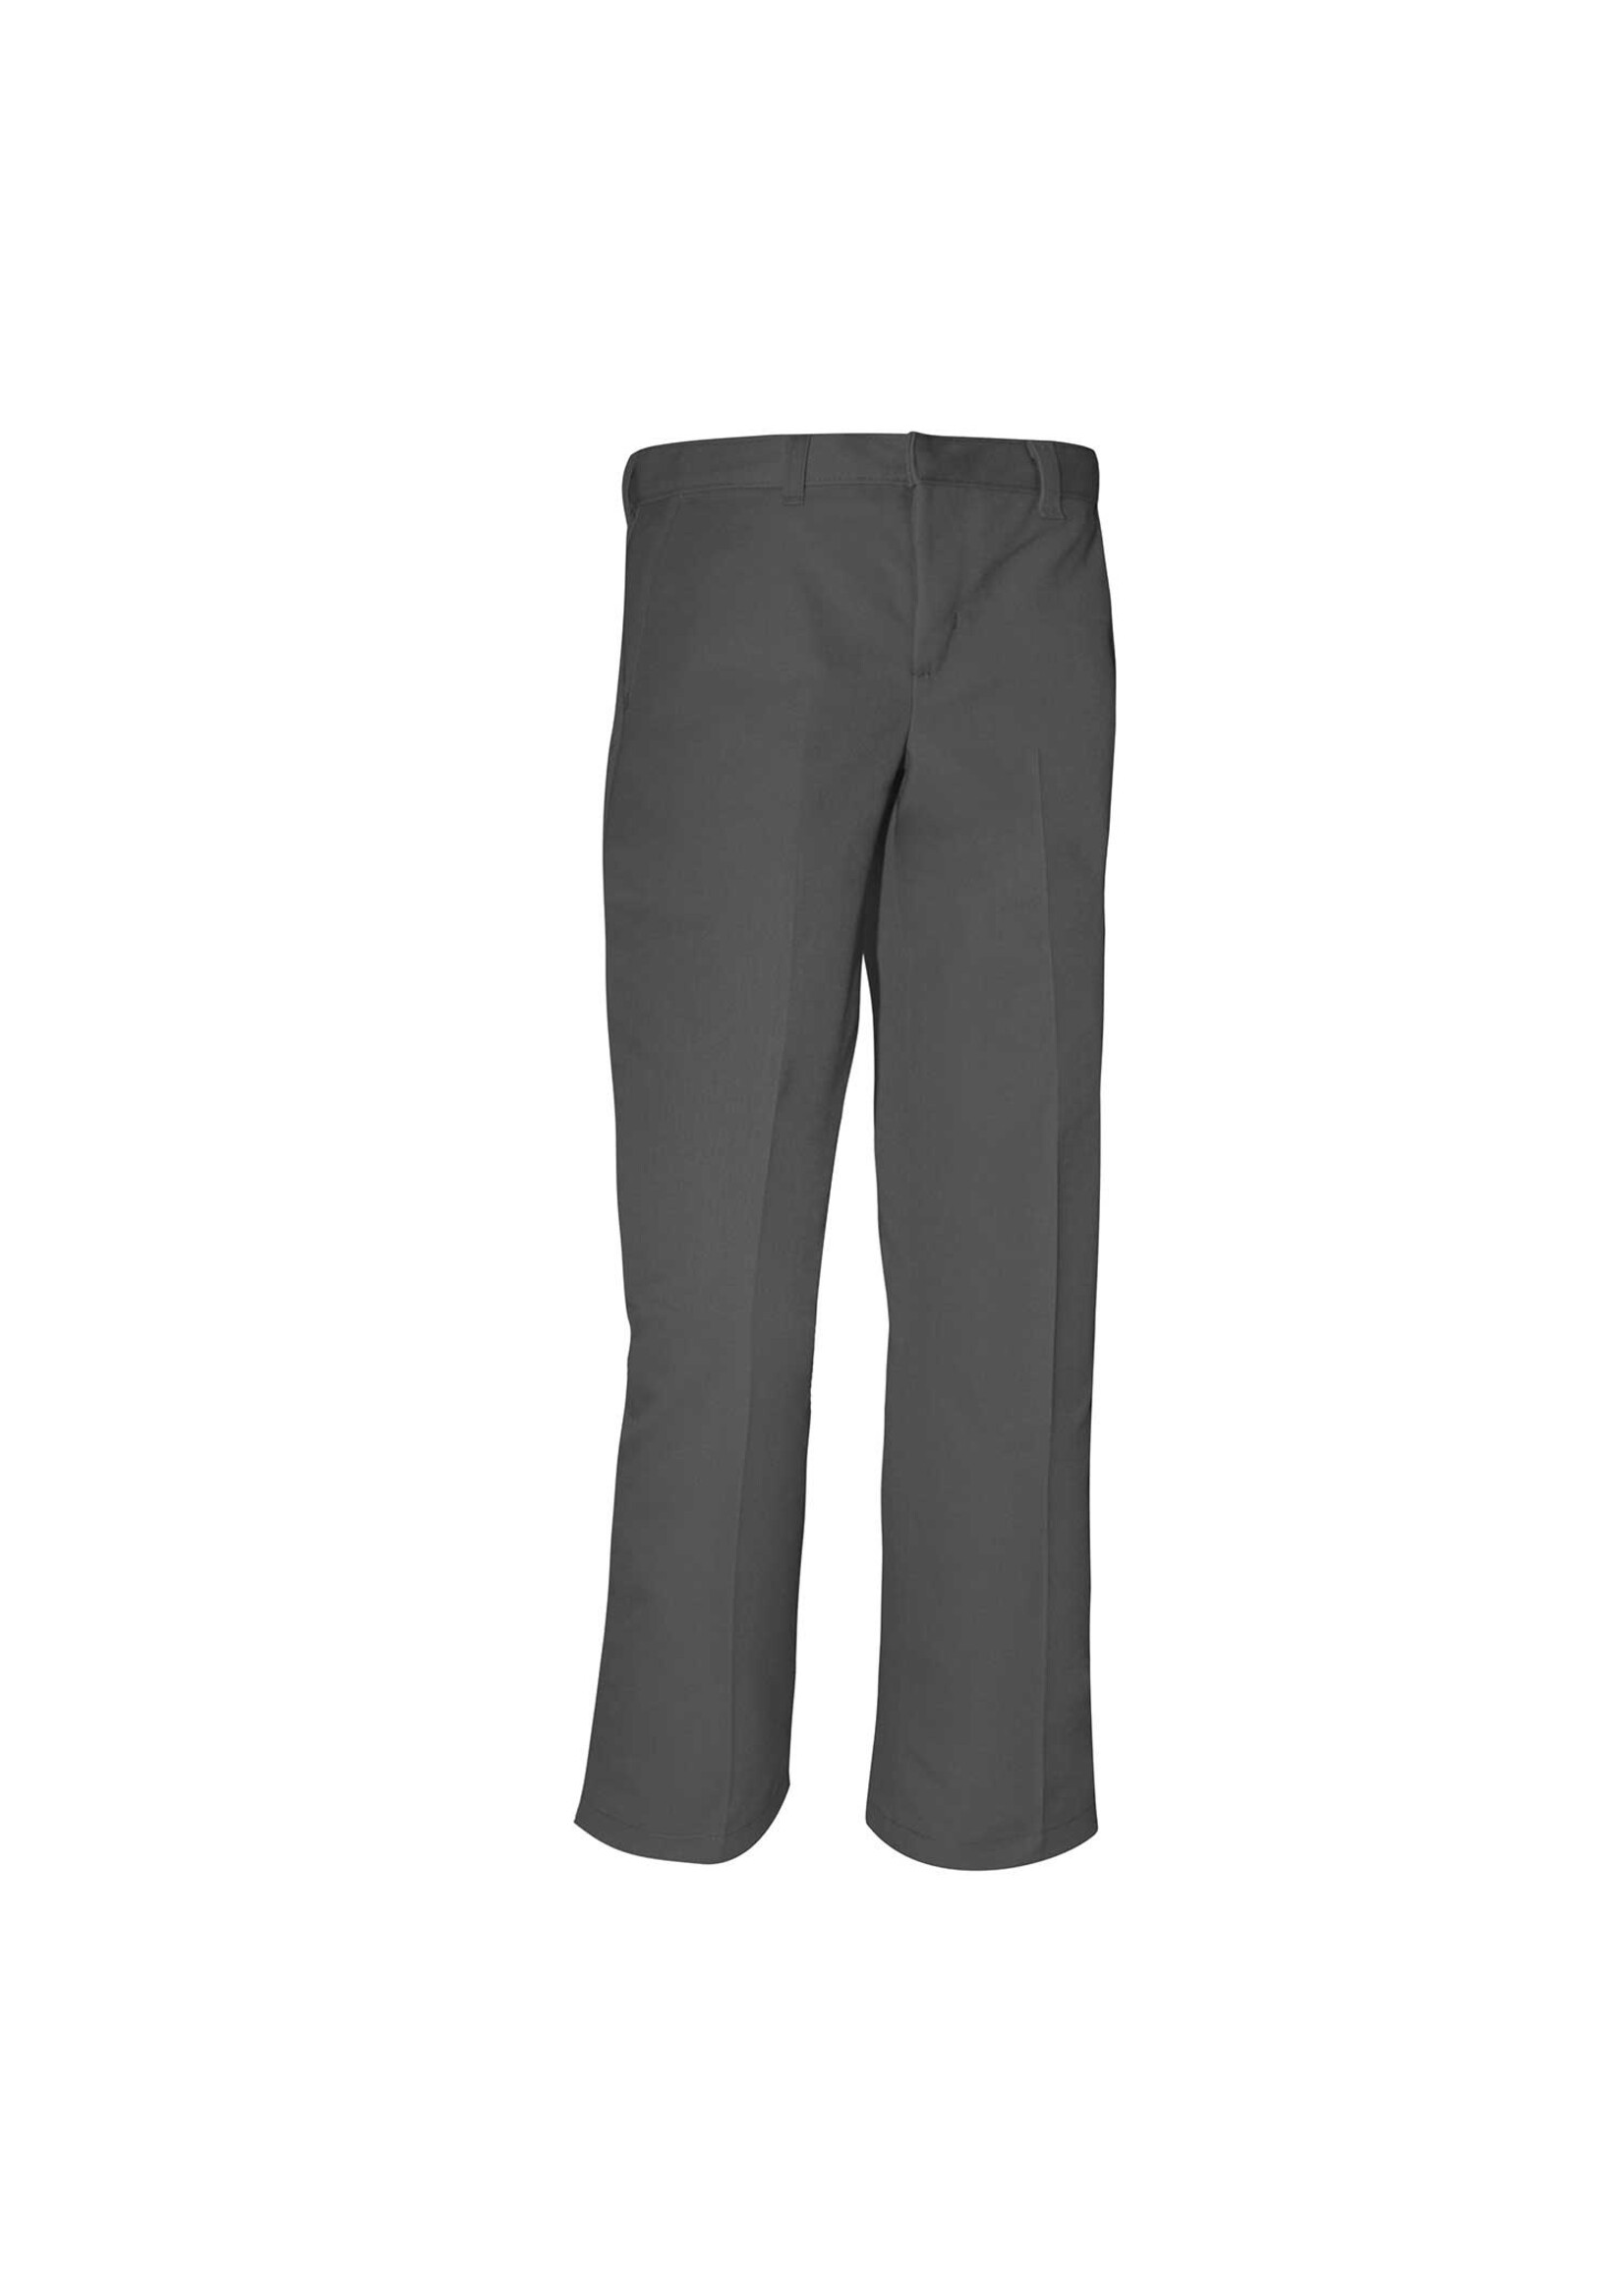 Snickers Workwear 6923 FlexiWork Floorlayer Pant + Holster Pockets - B